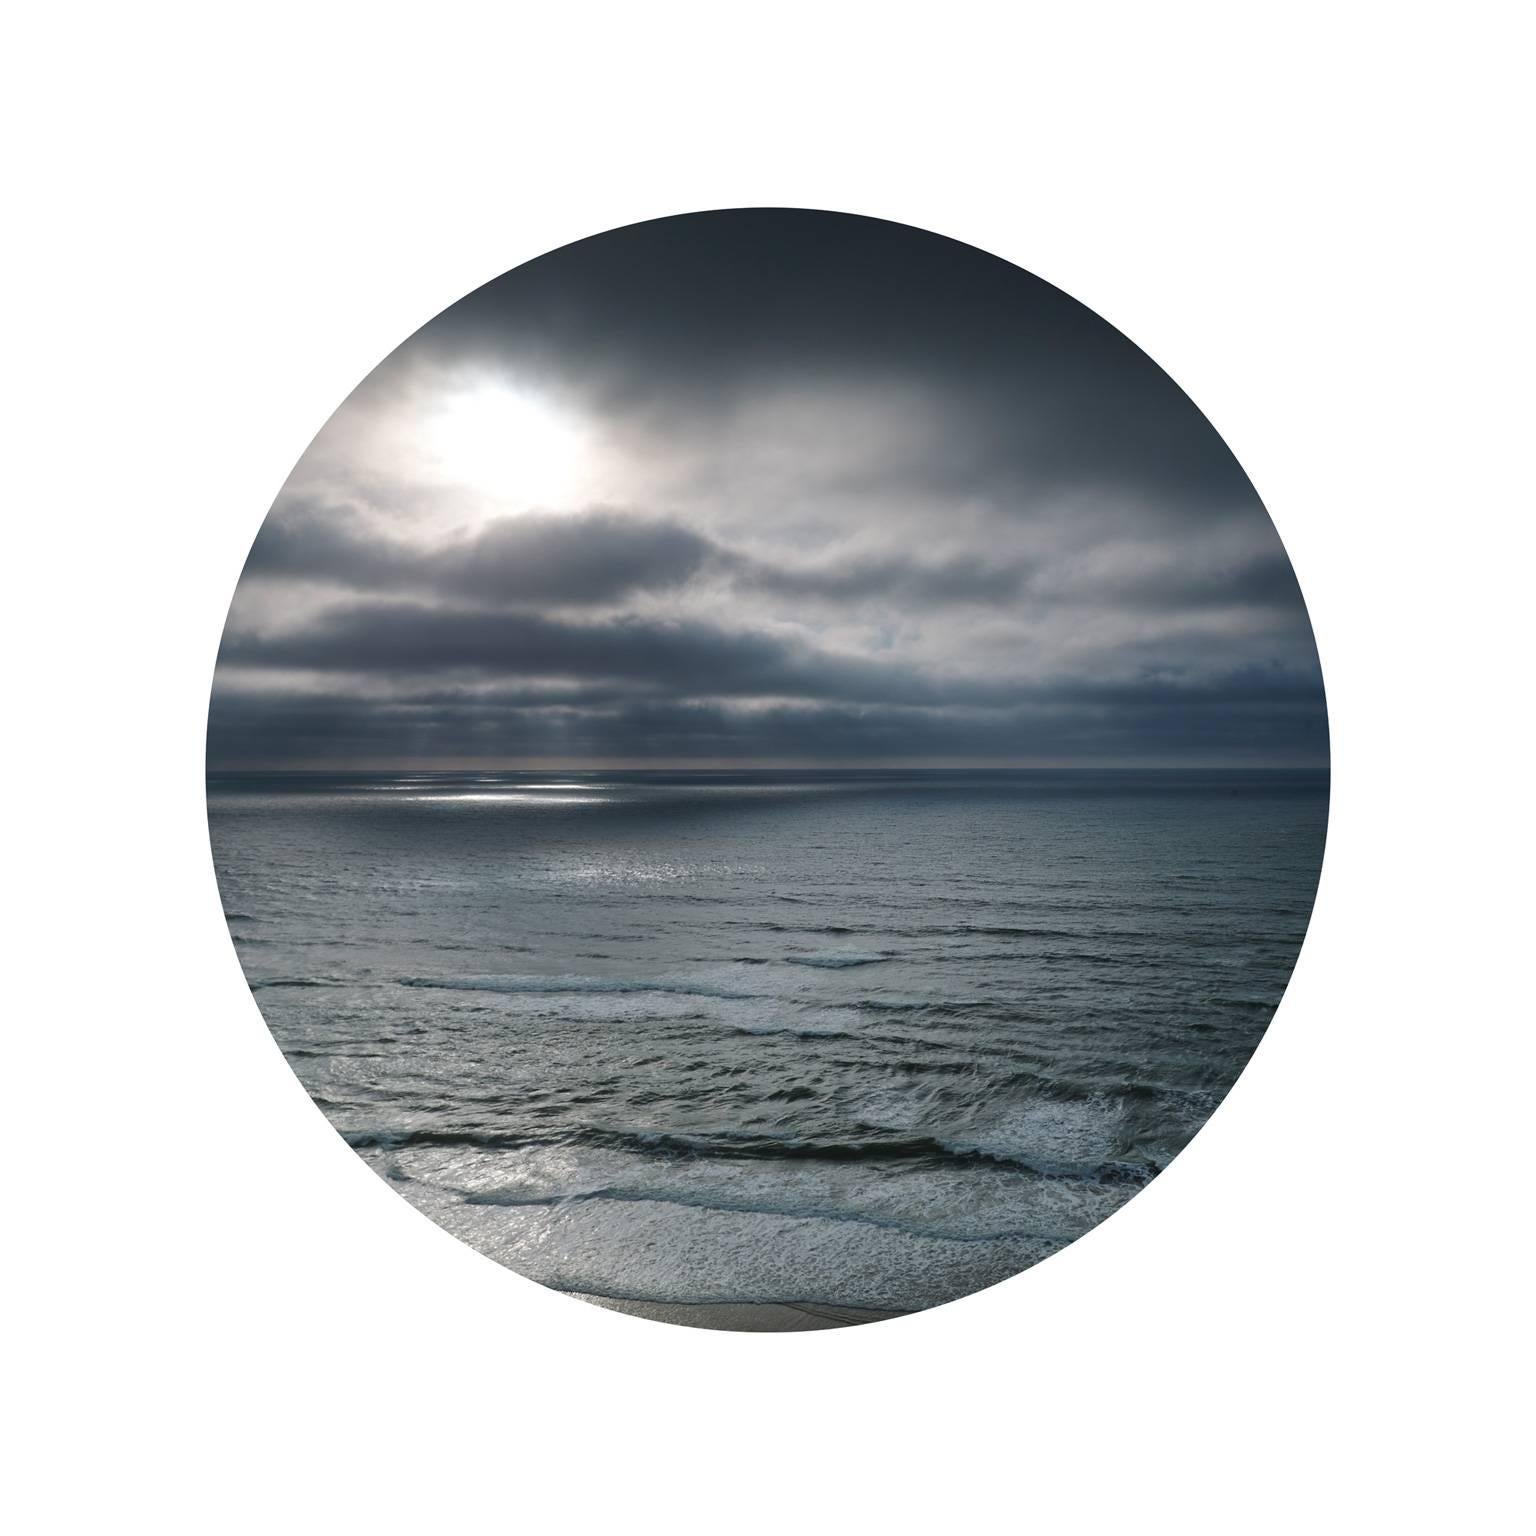 Seascape II - abstract ocean cloudscape in circular viewpoint  (22" diameter)